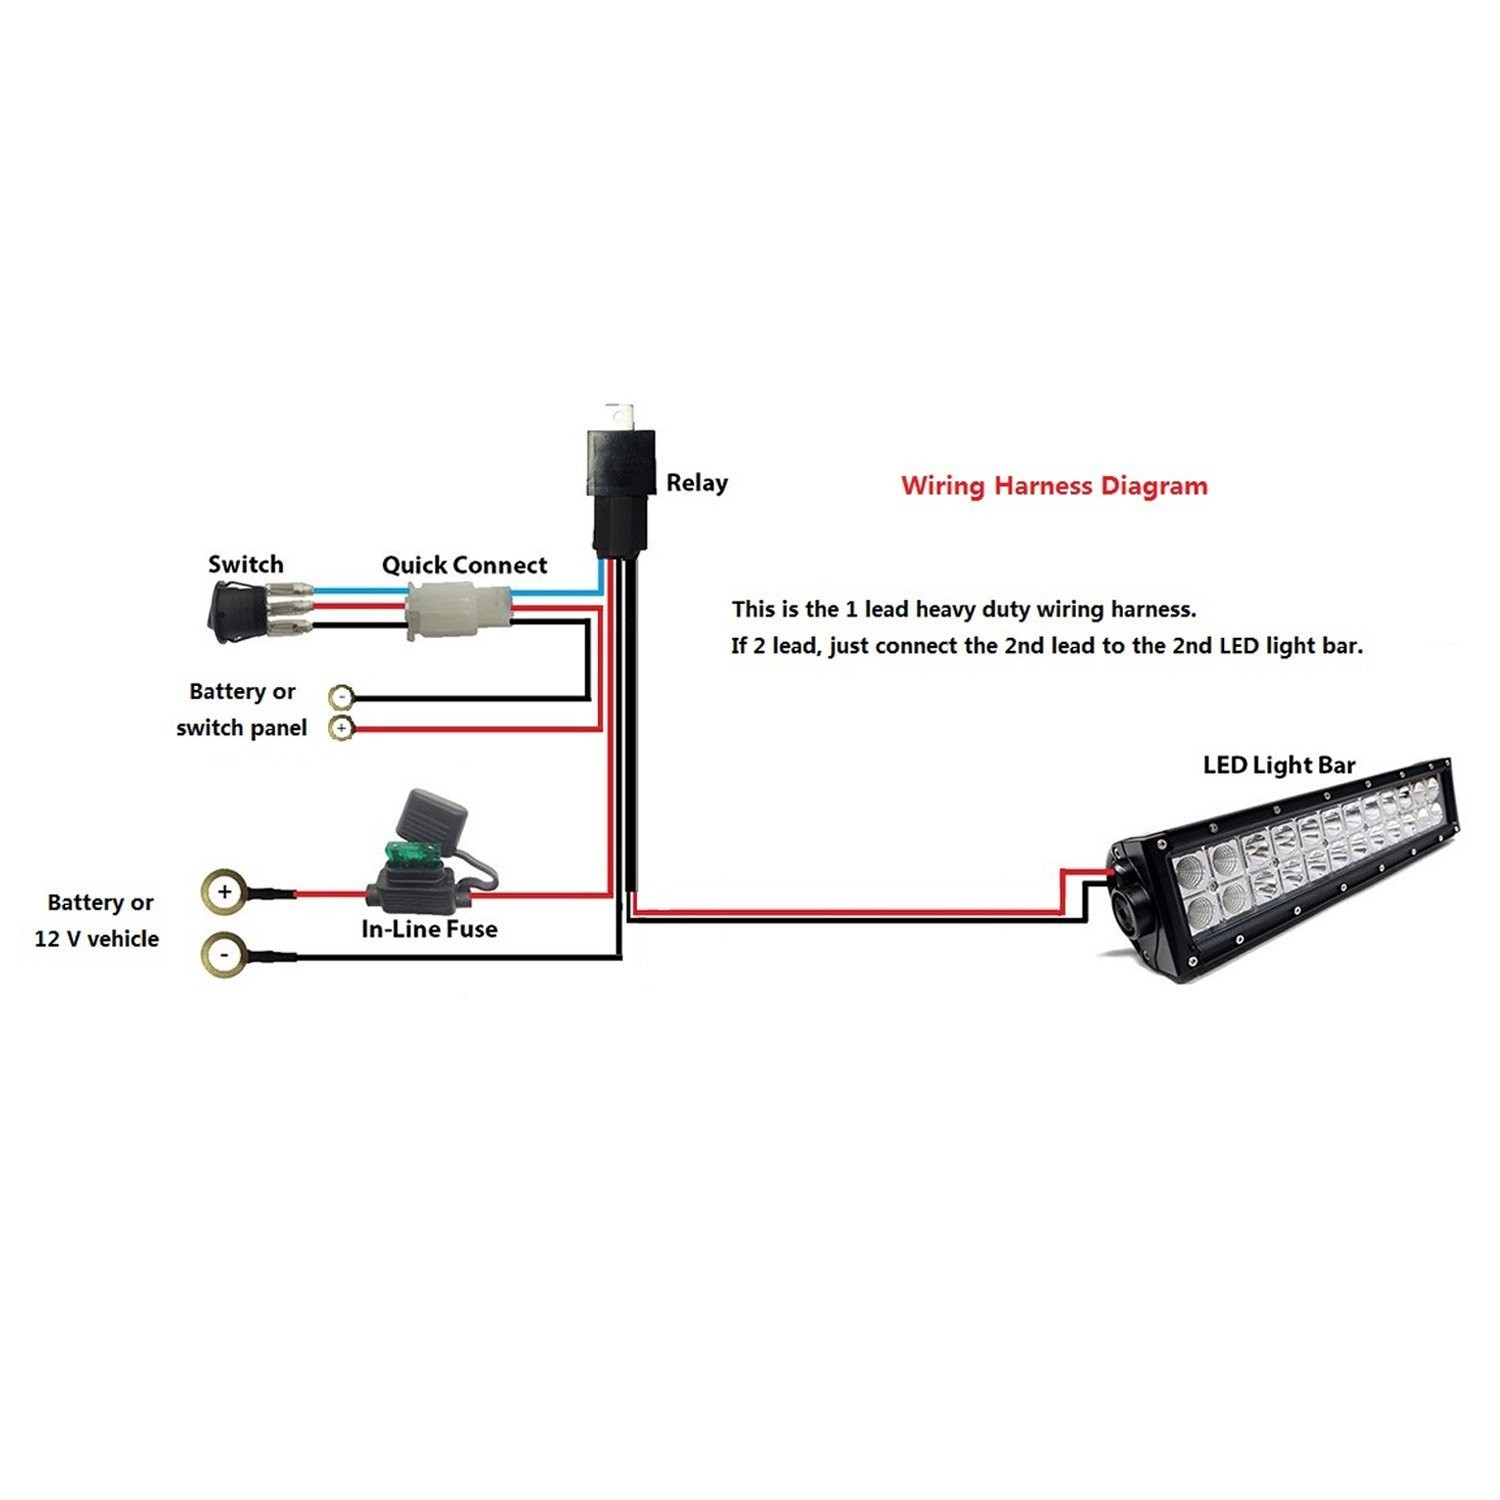 Led Light Bar Relay Wiring Diagram Inspirational Led Wiring Diagram with Relay New Wiring Diagram Relay